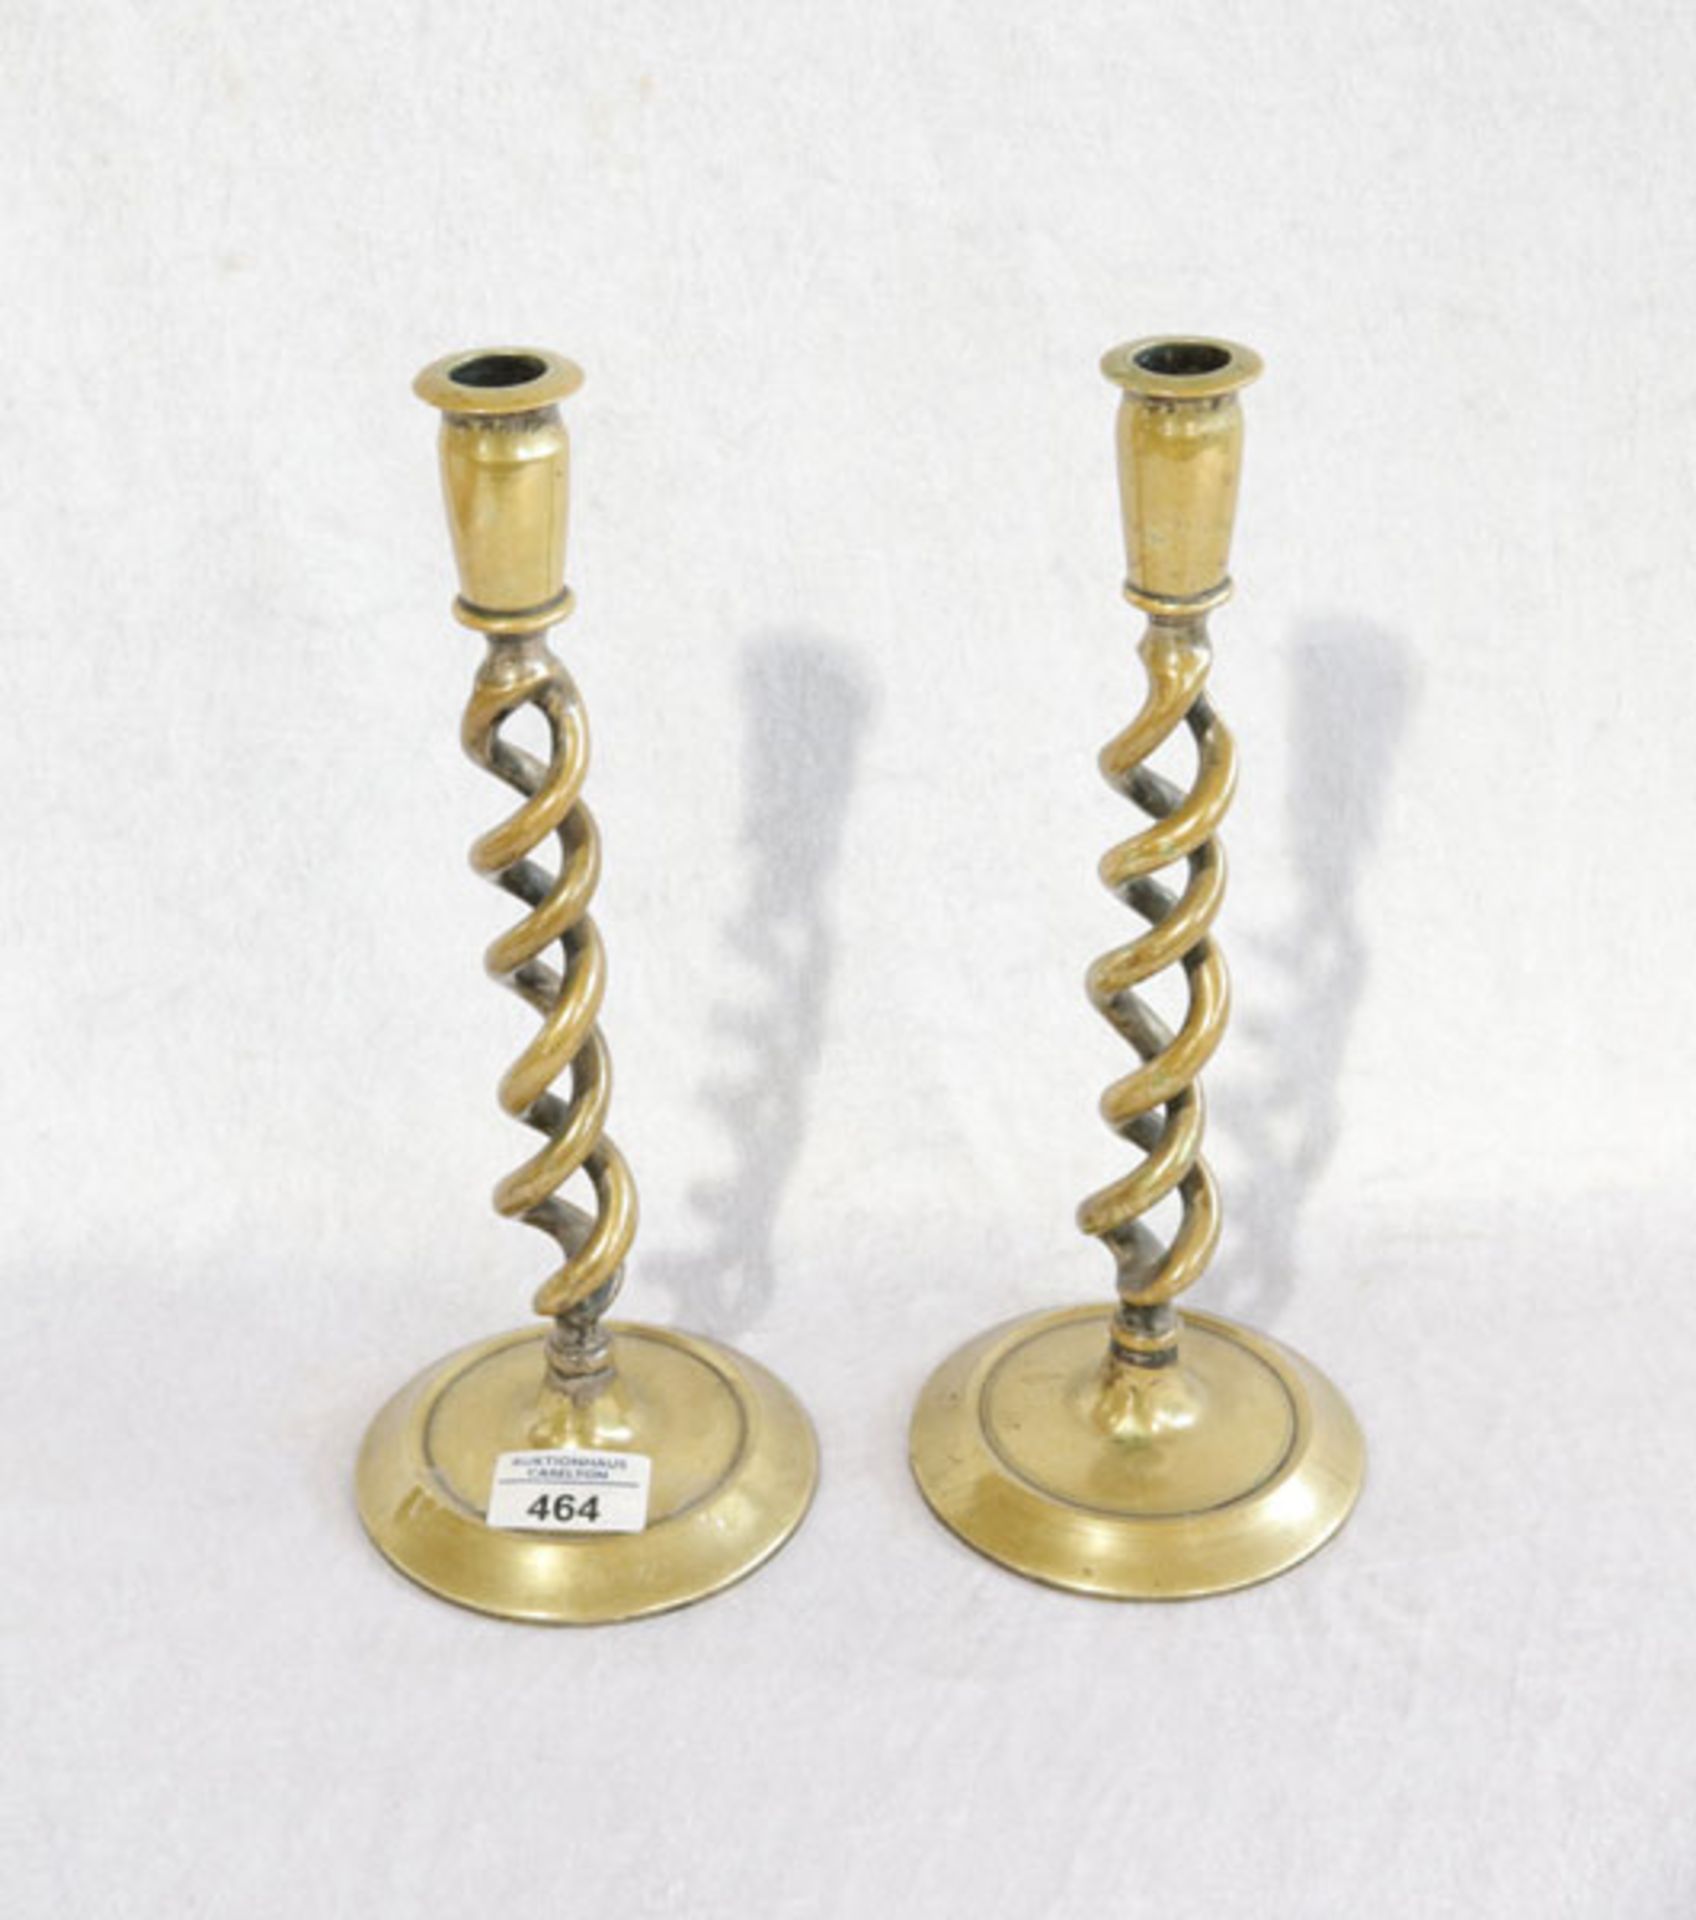 Paar Barley Twist Messing Kerzenleuchter, England um 1900, H 29 cm, D 12 cm, Gebrauchsspuren